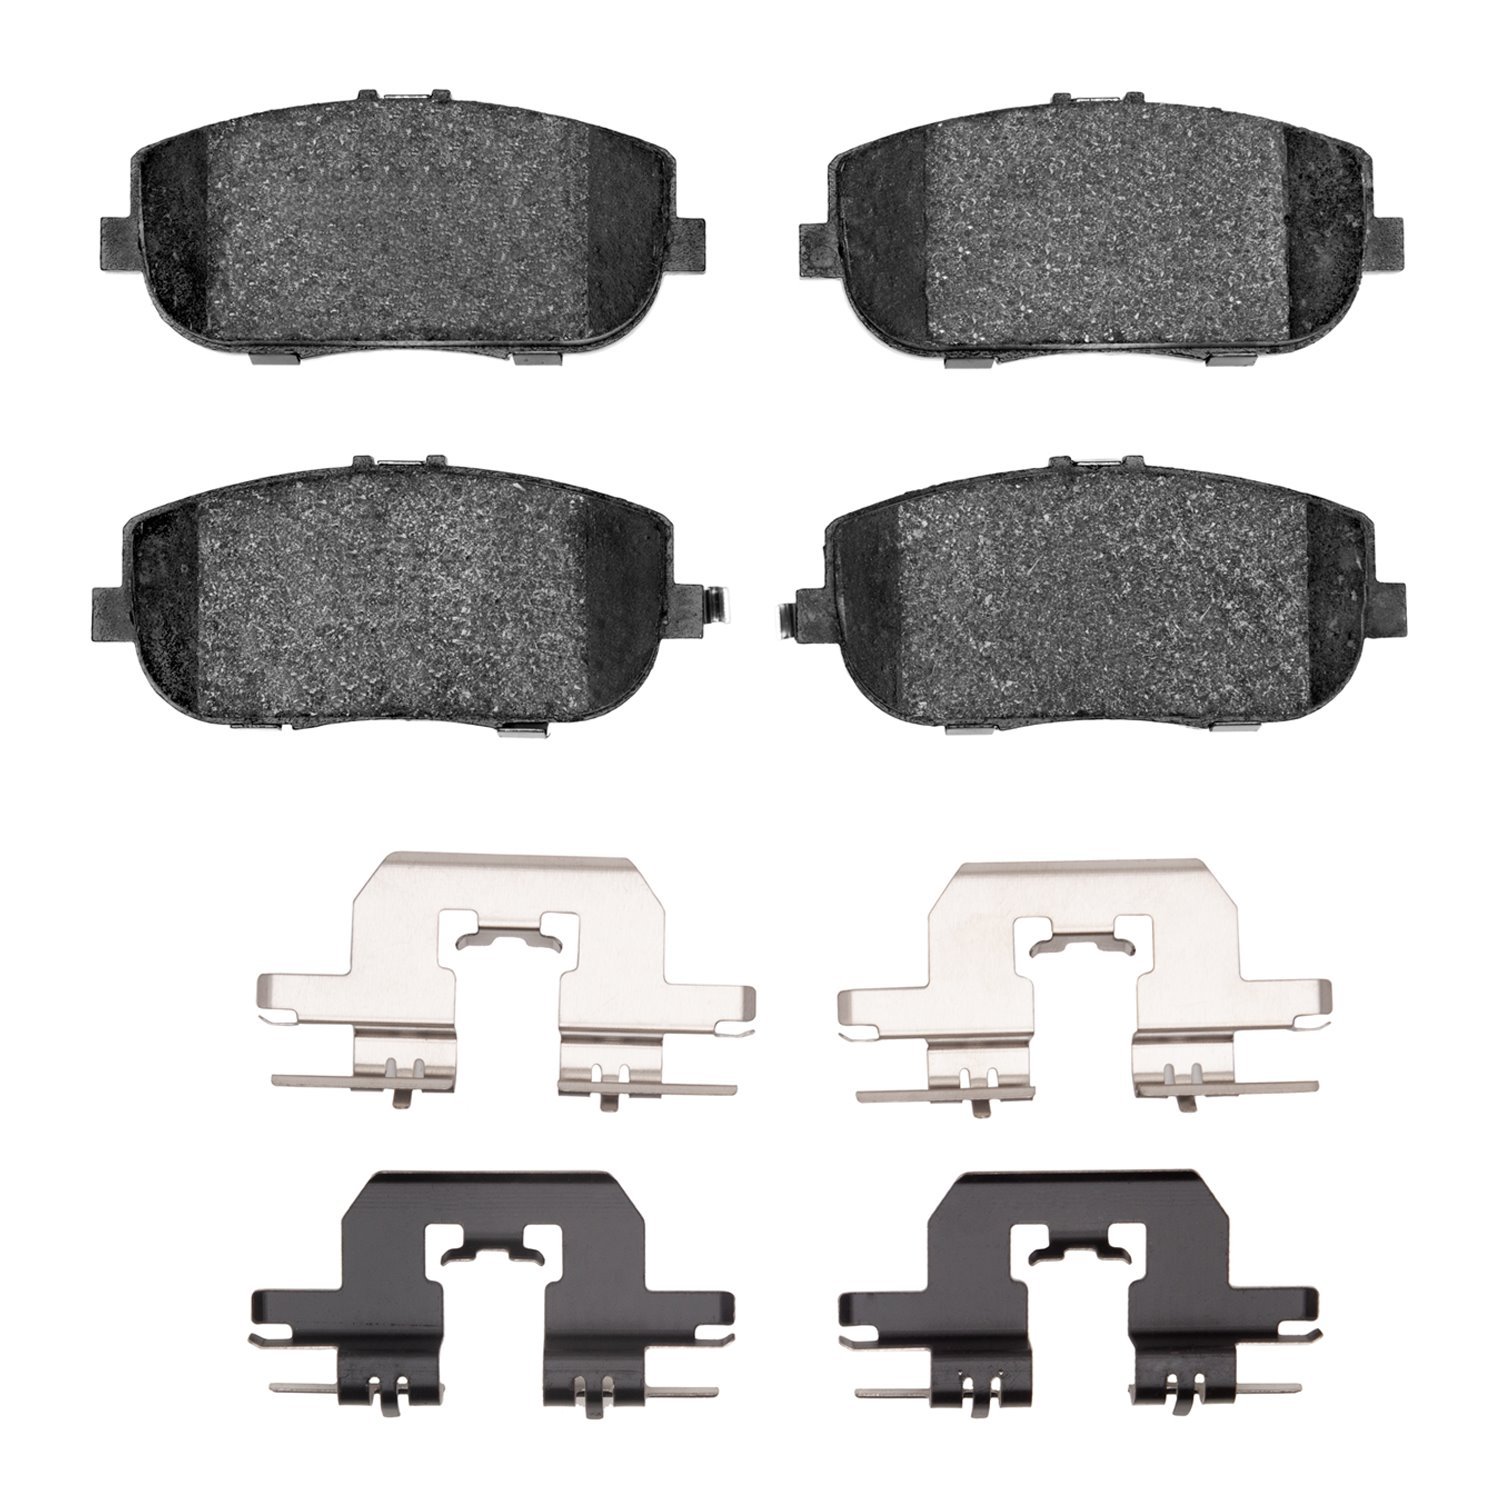 1600-1180-01 5000 Euro Ceramic Brake Pads & Hardware Kit, Fits Select Multiple Makes/Models, Position: Rear